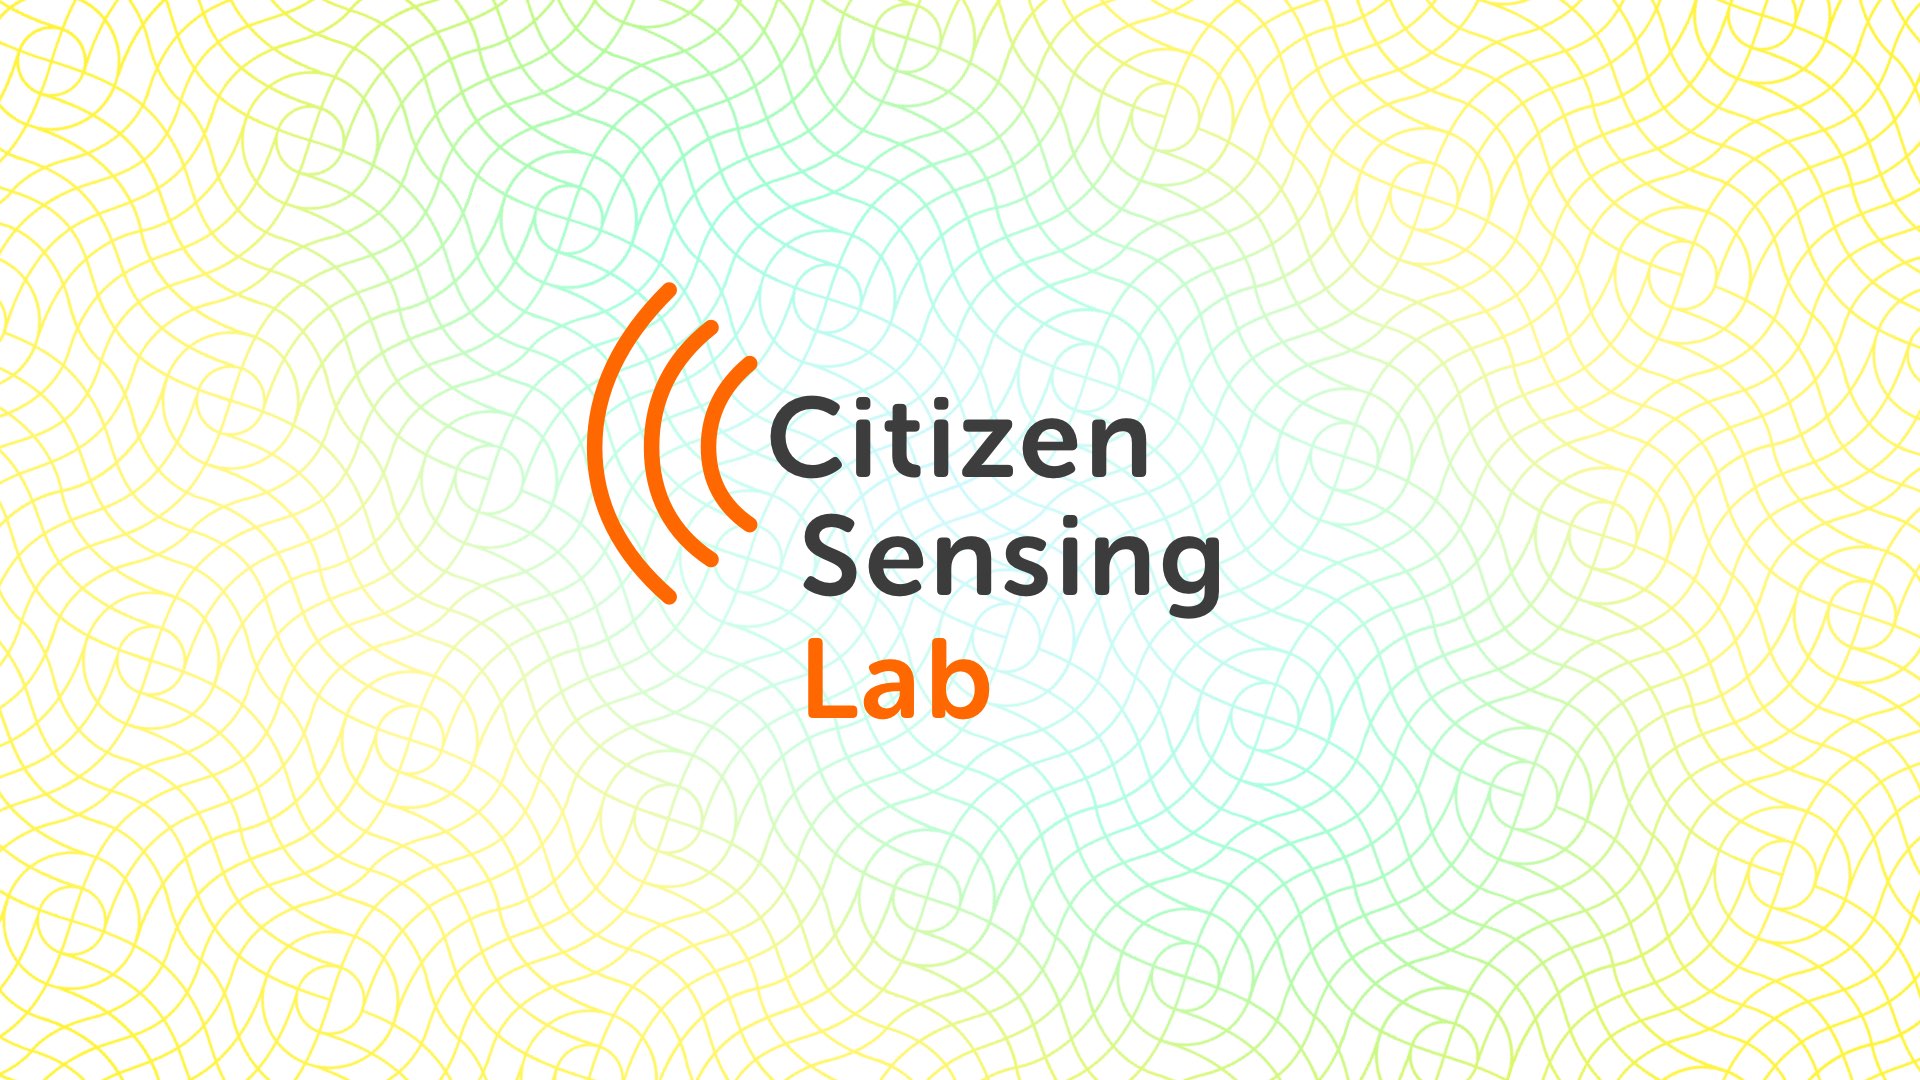 +CityxChange Citizen Sensing Lab number 1